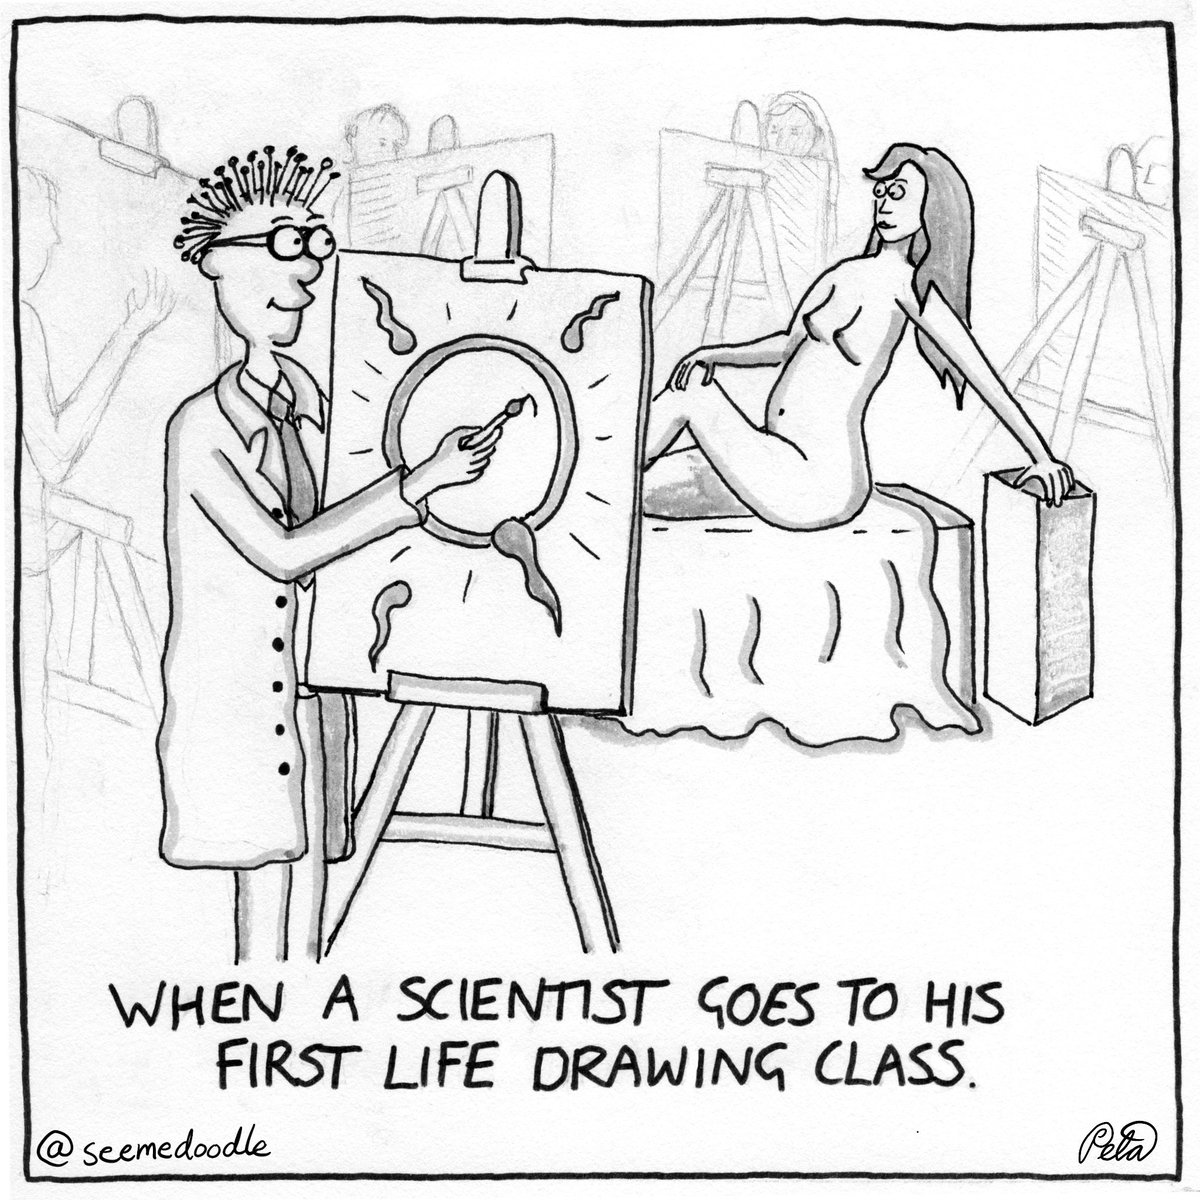 When #Science meets #art. #gagcartoon #lol #lifedrawing #seemedoodle #webcomics #Melbourne #cartoonist